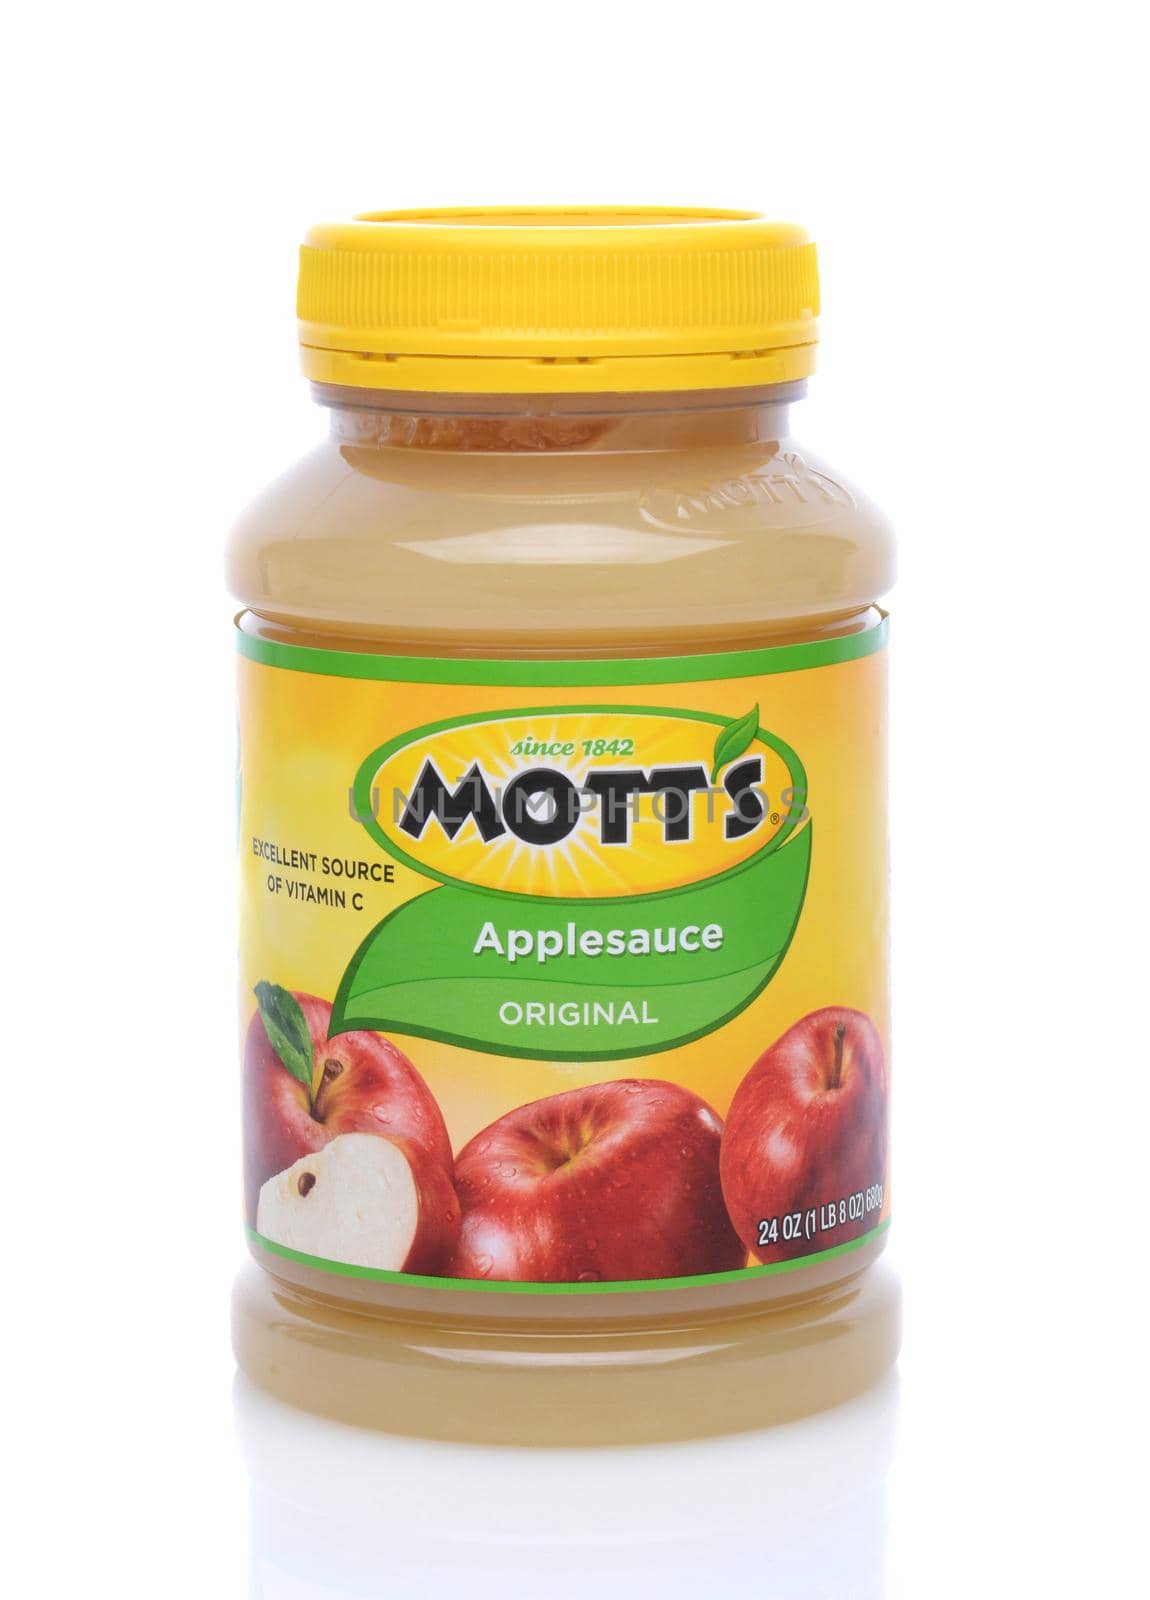 Motts Apple Sauce by sCukrov